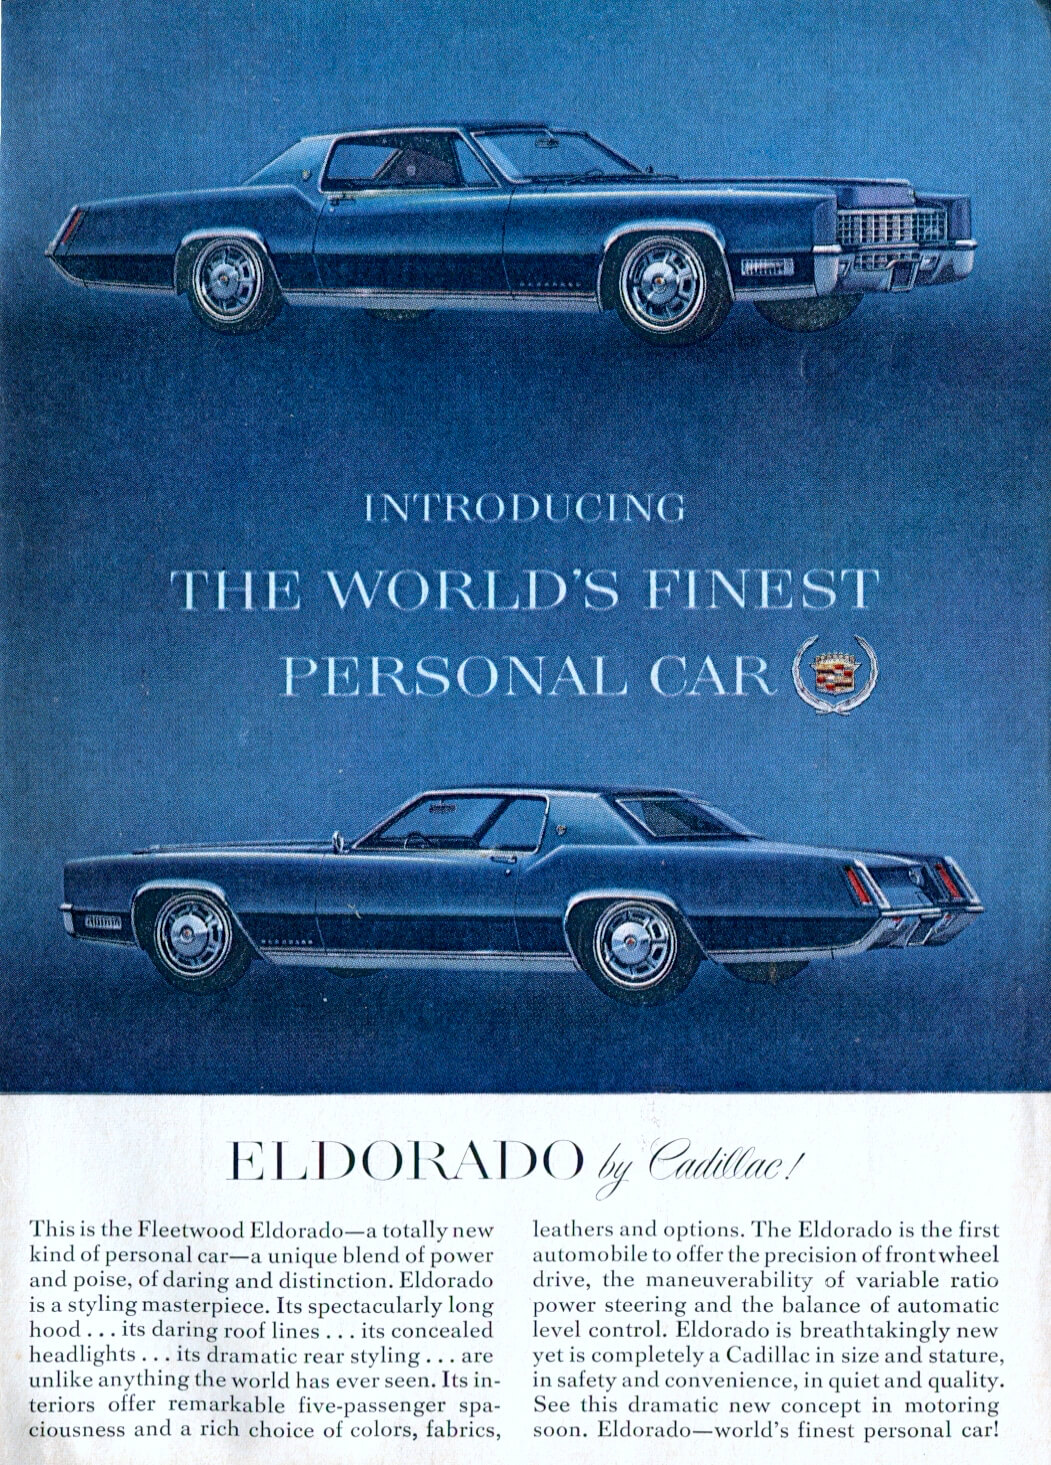 1967 Cadillac Eldoradon mainosjuliste. Kuva: SenseiAlan/Flickr/GM.